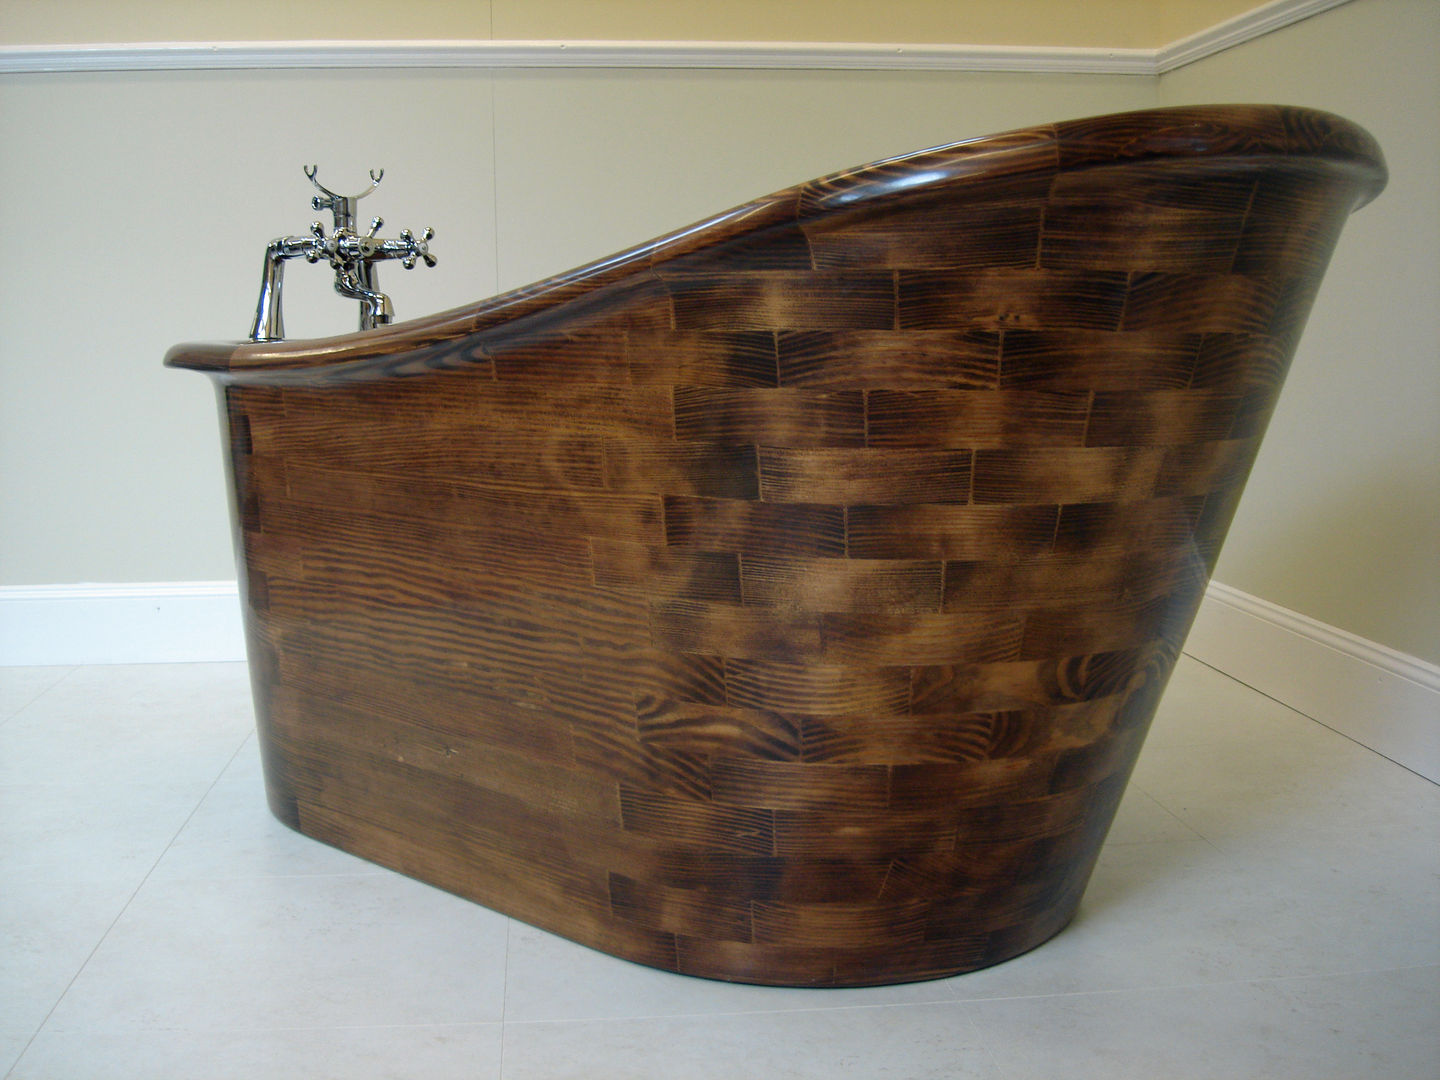 Wooden Bath Range, Wooden Baths Limited Wooden Baths Limited الغرف